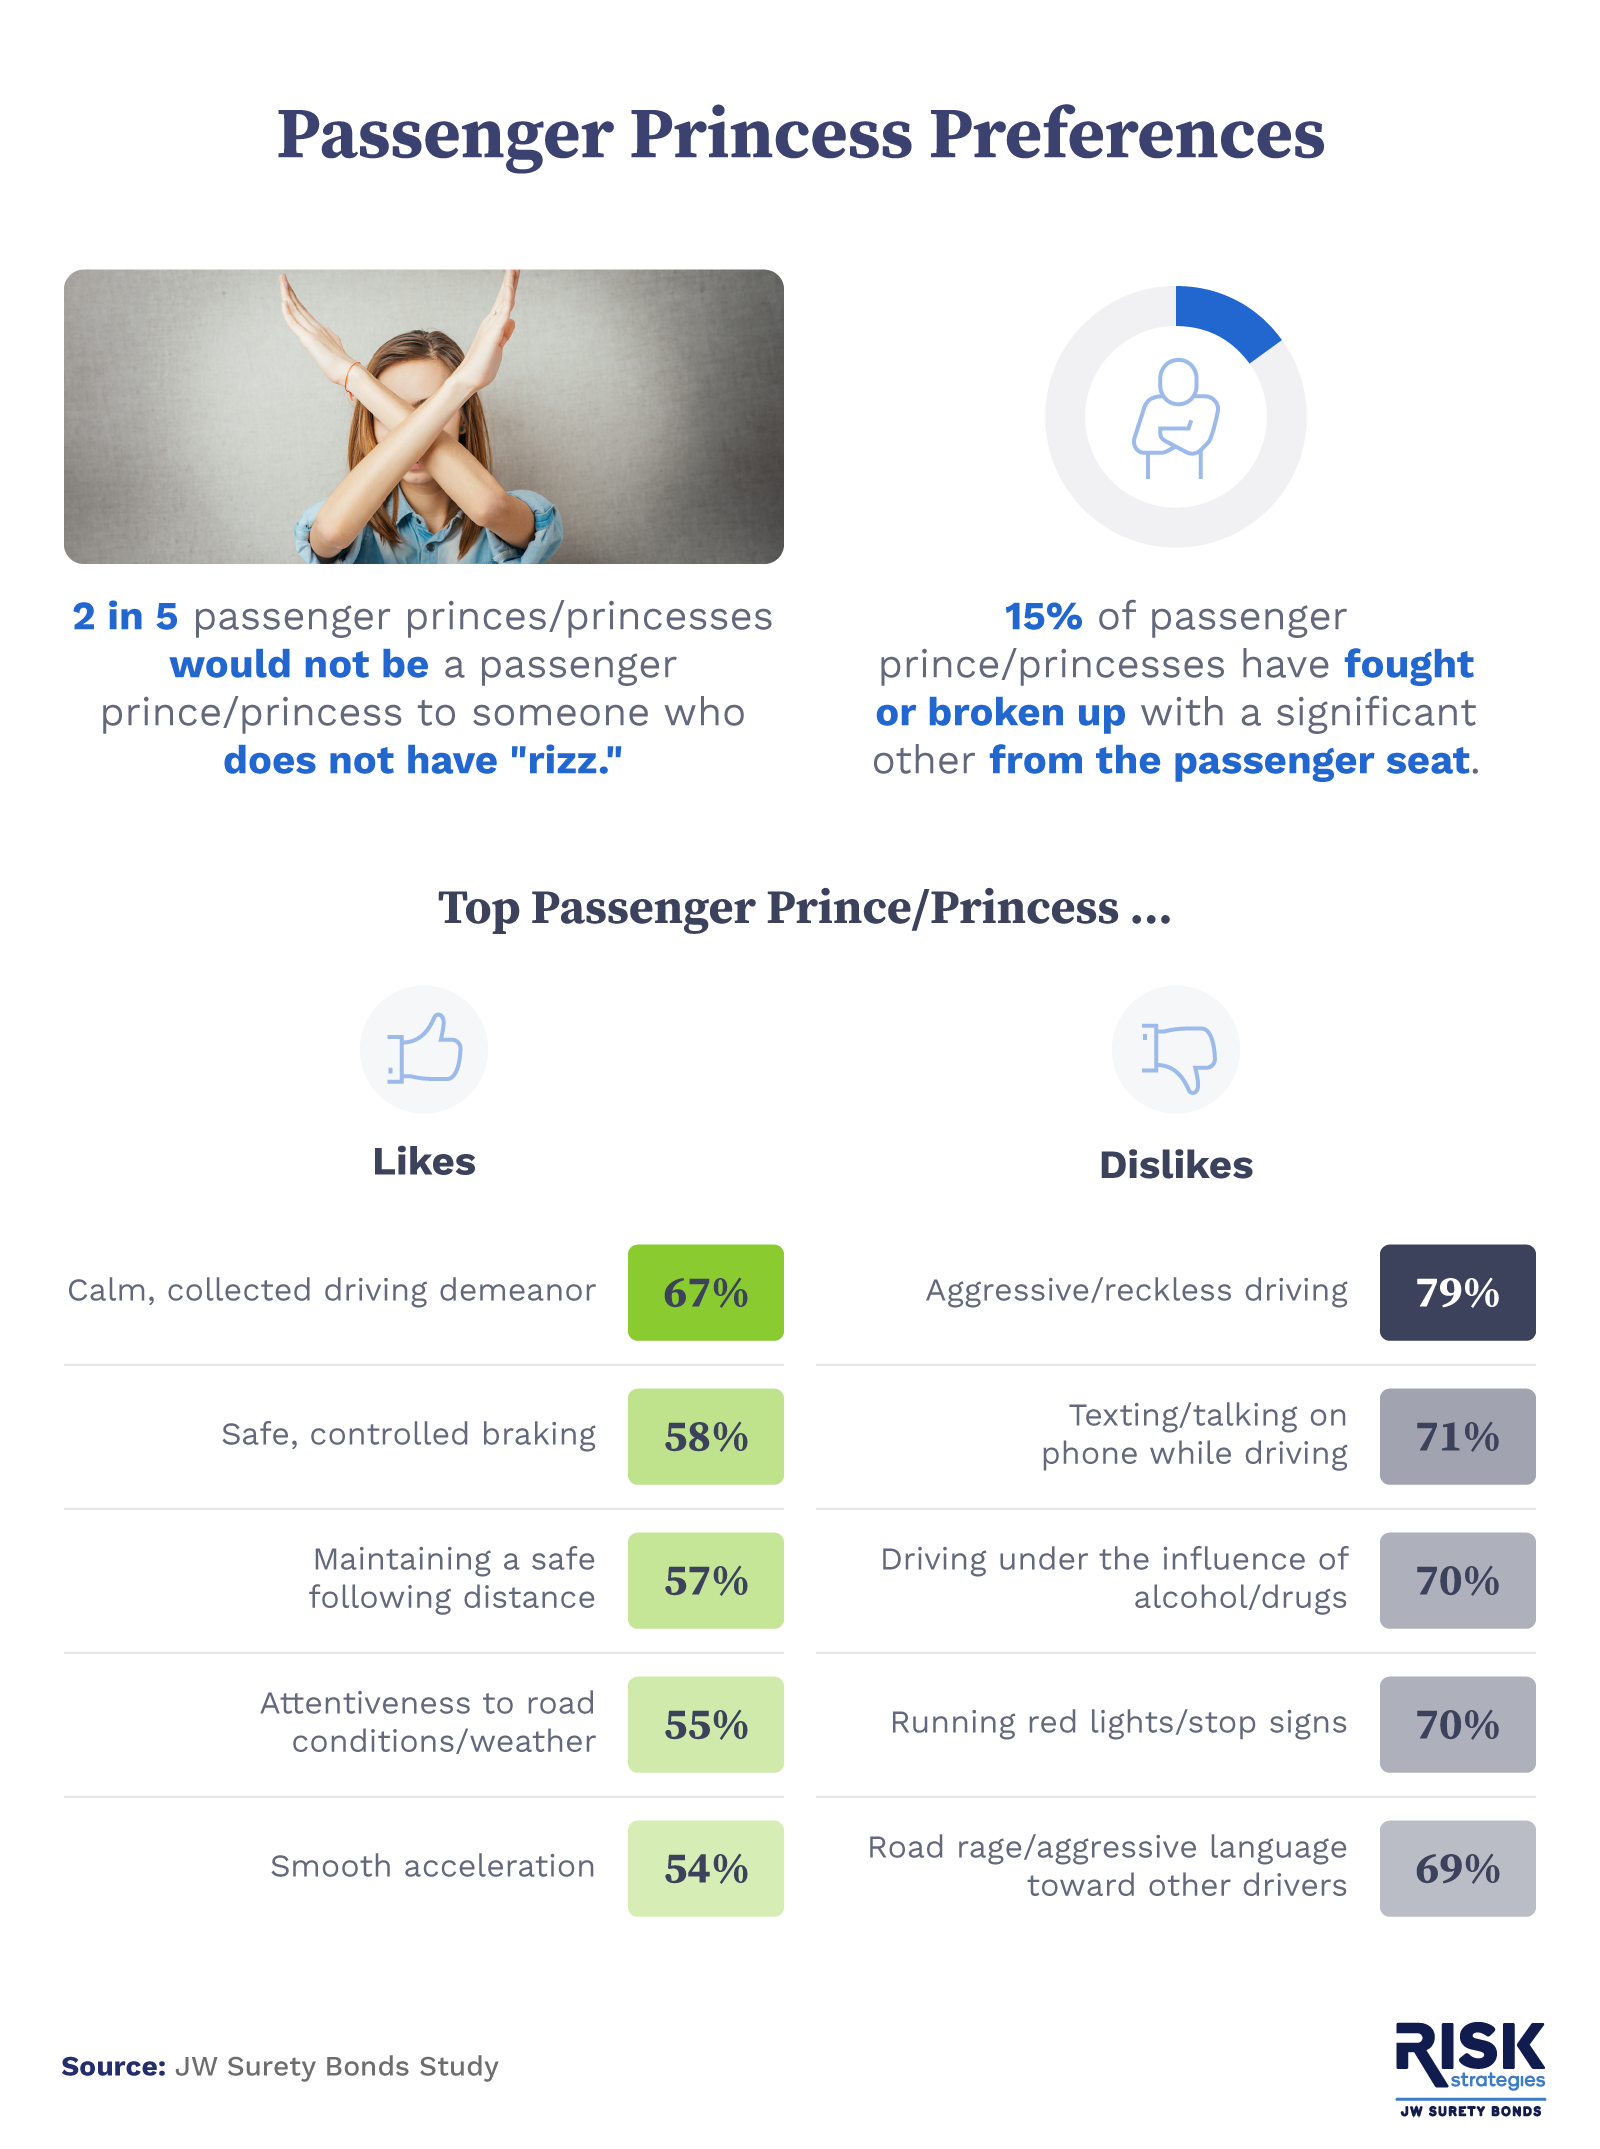 Passenger princess preferences infographic.